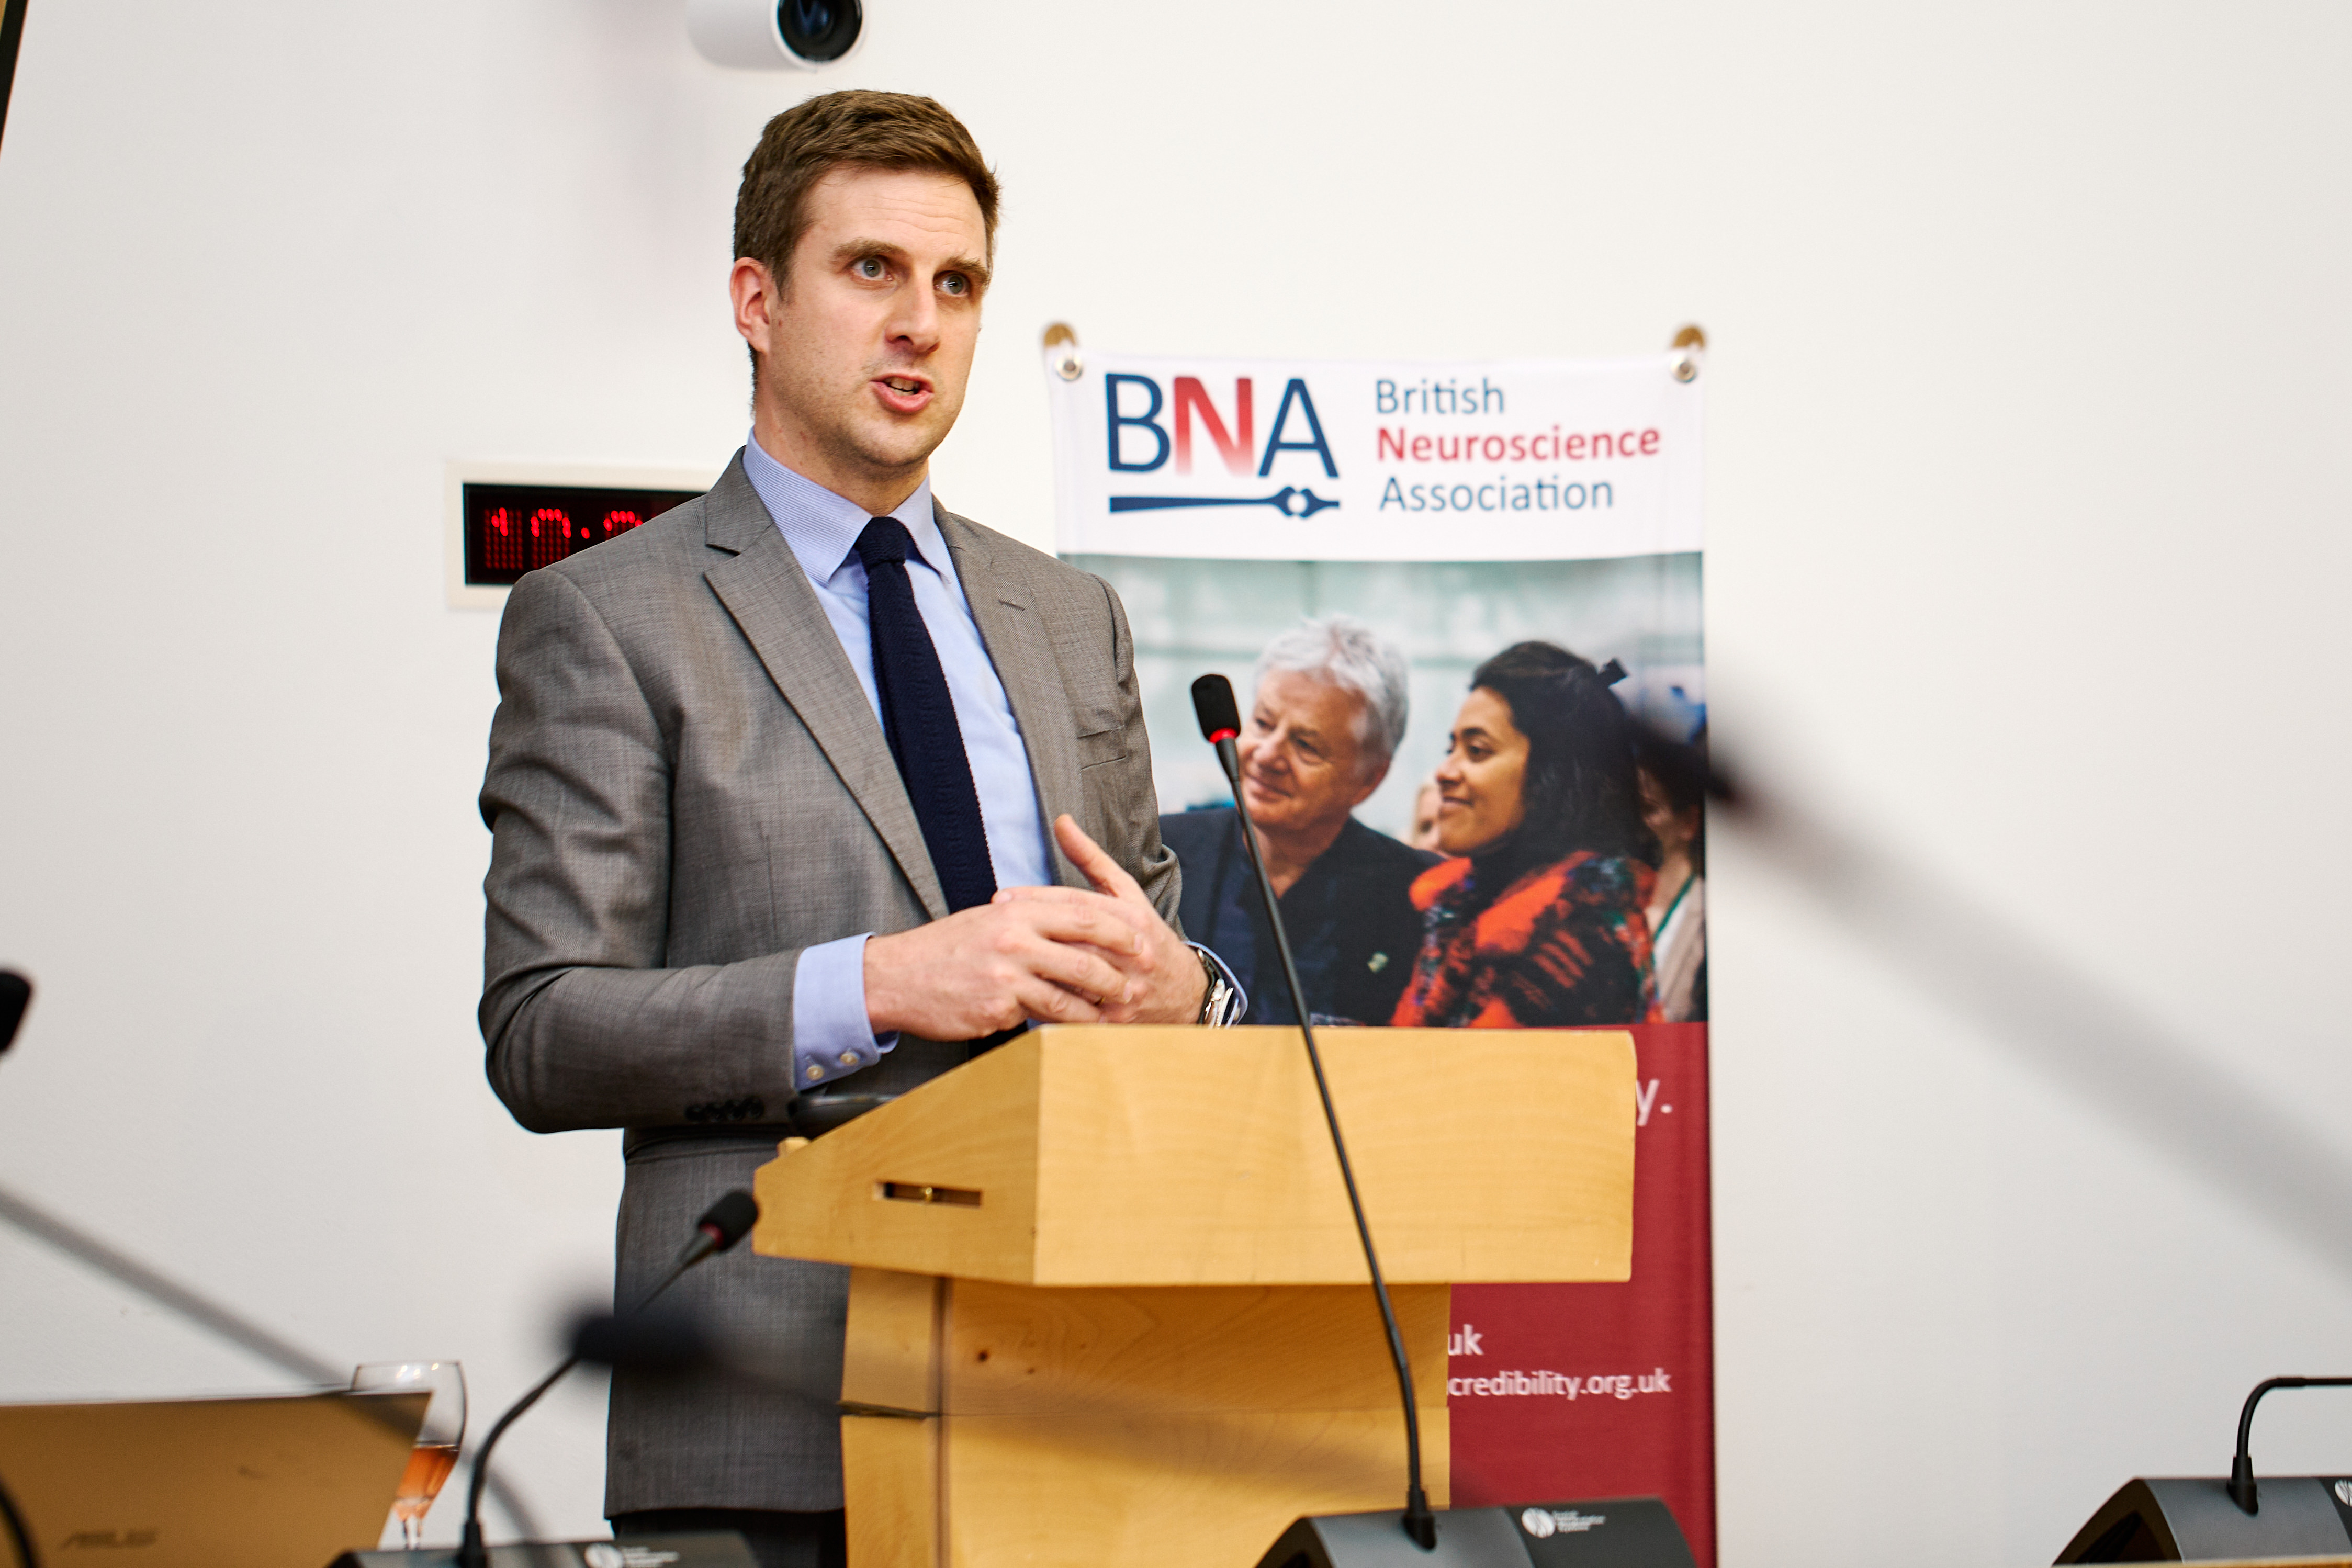 Daniel Johnson MSP speaking at the BNA event